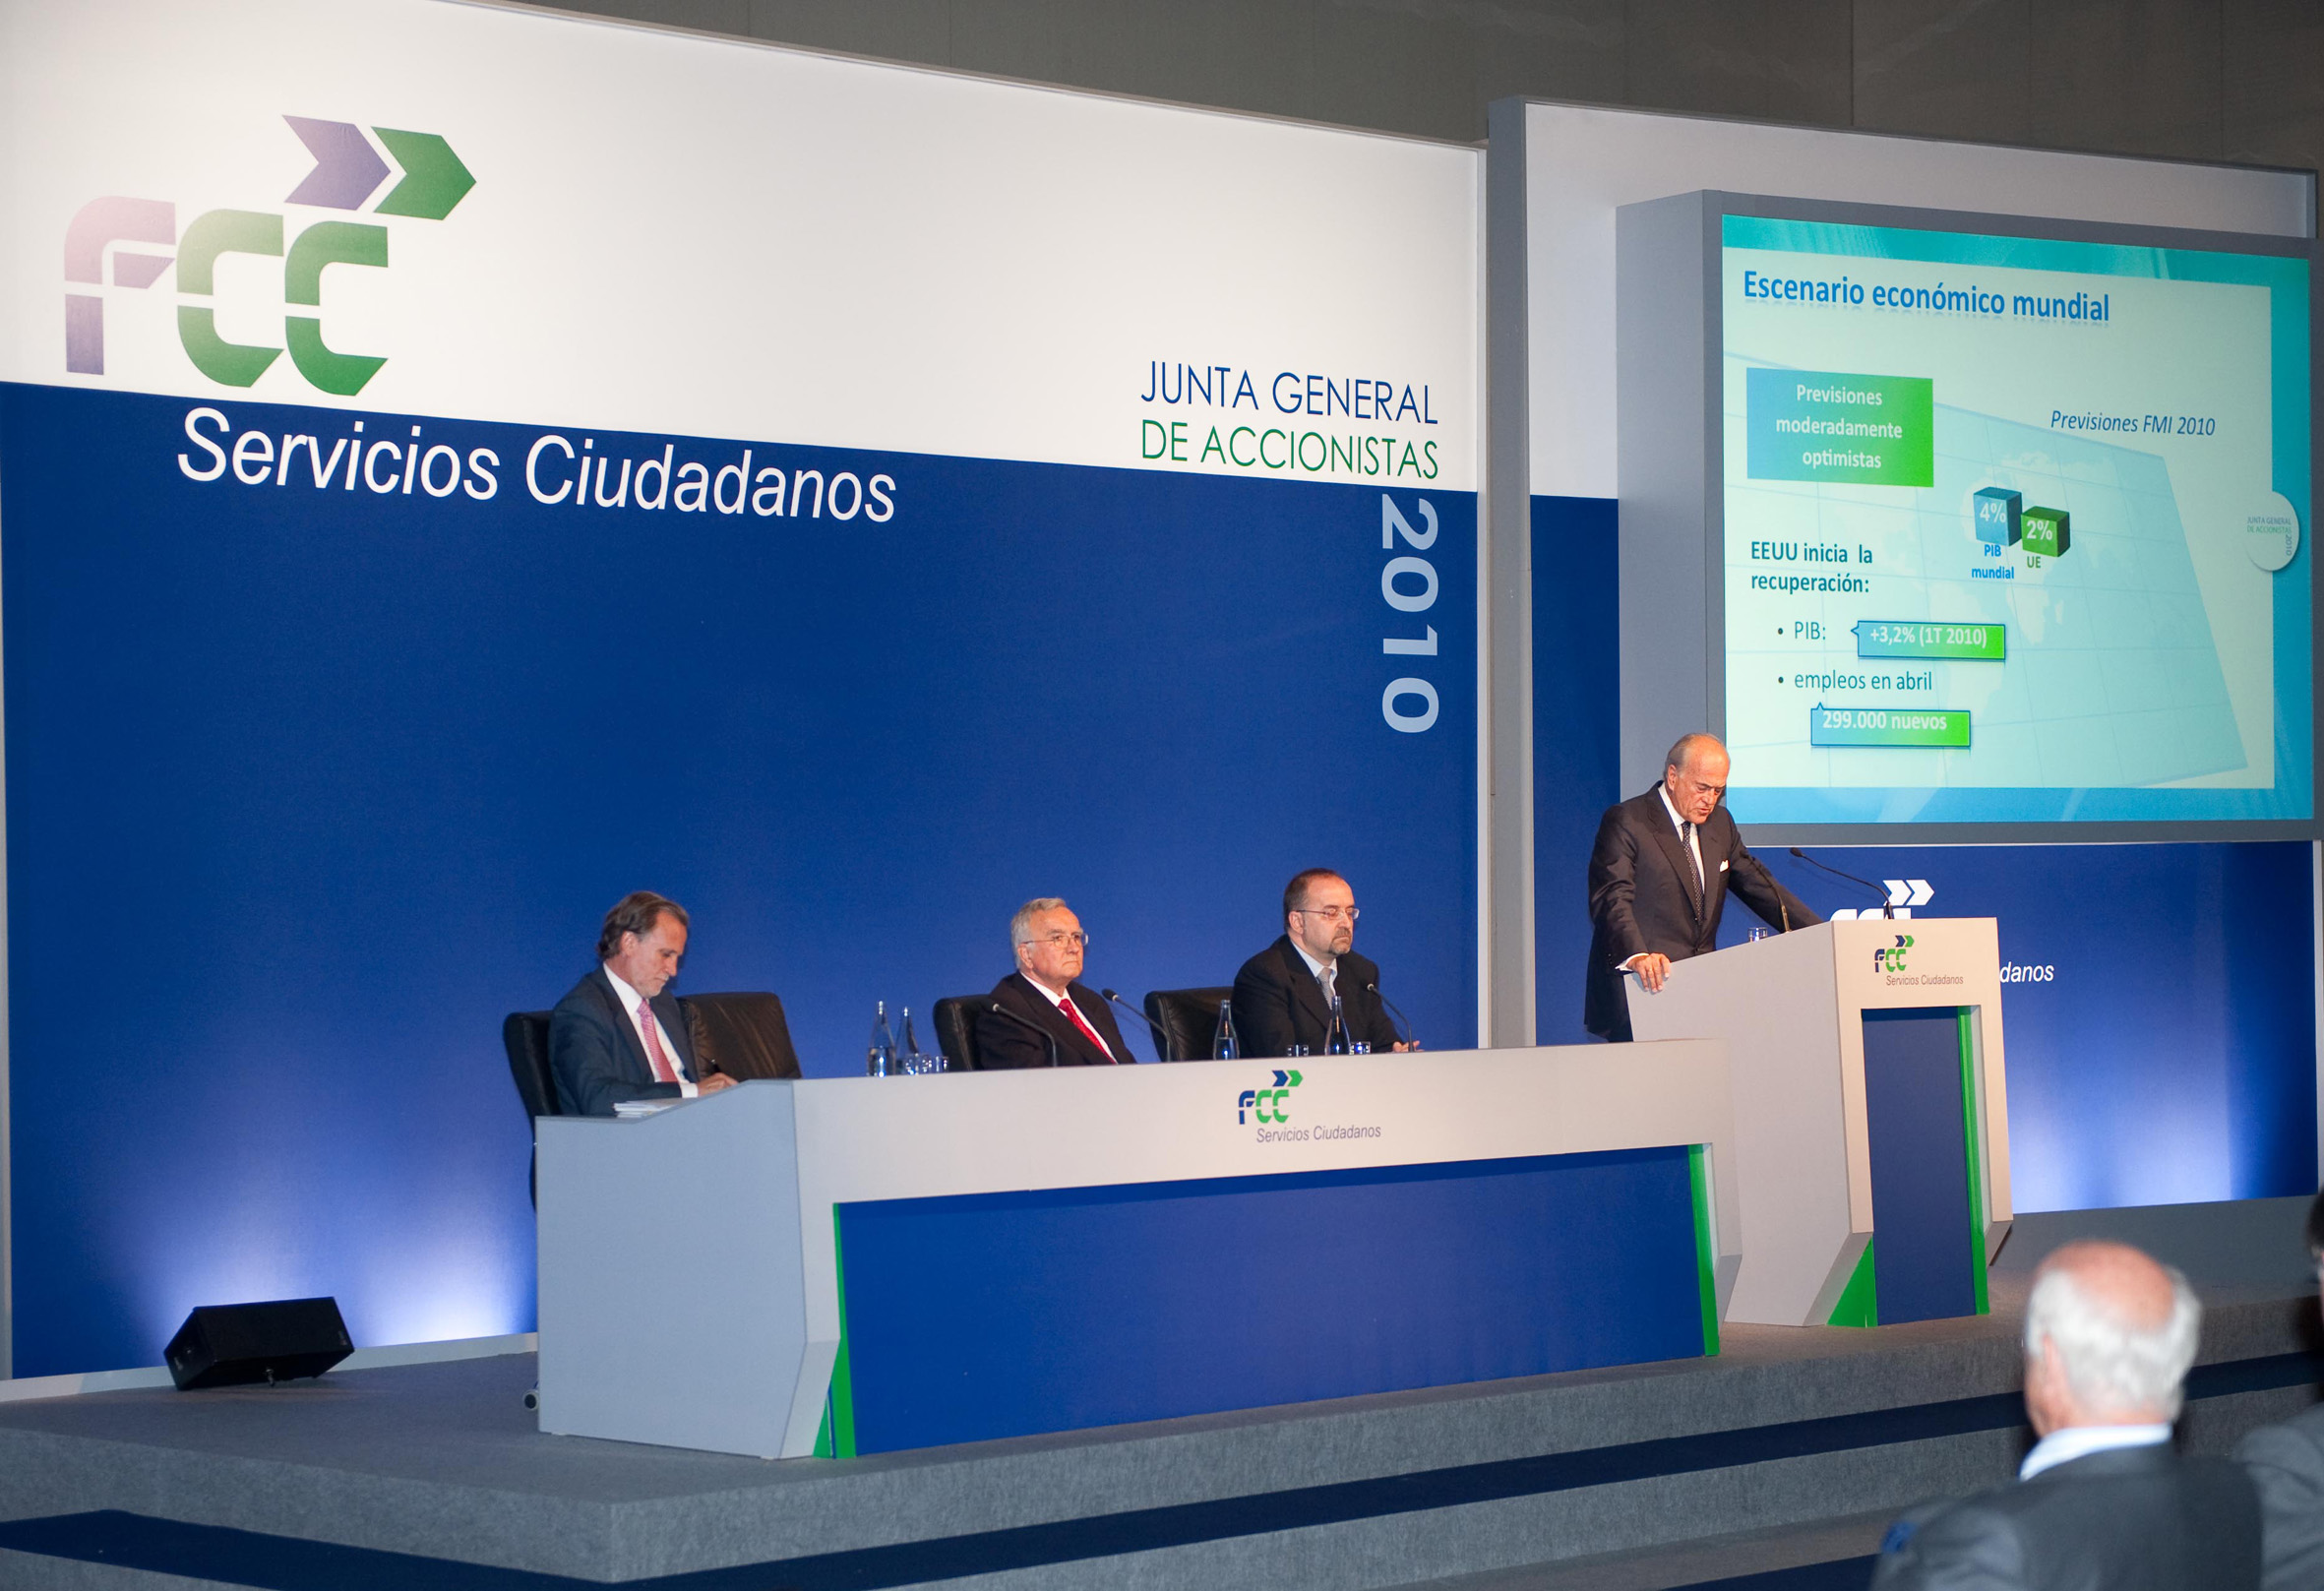 2010 Shareholders' Meeting